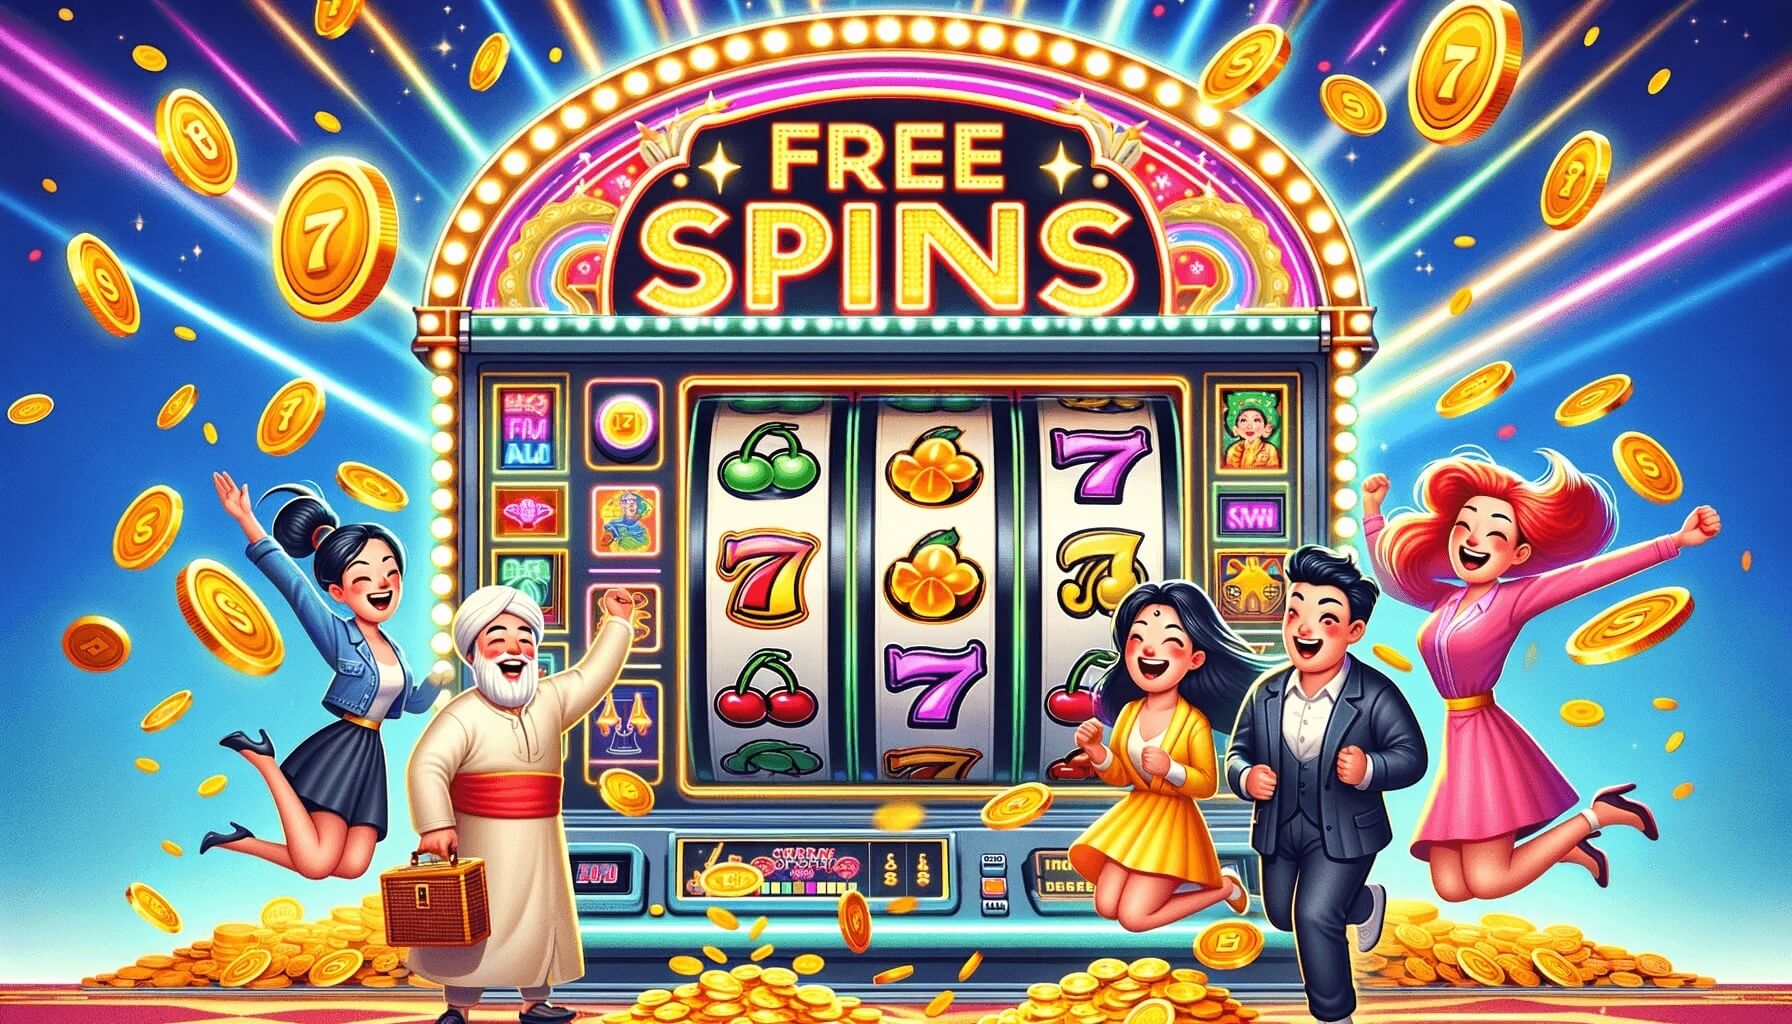 Free spins & gratis Casino